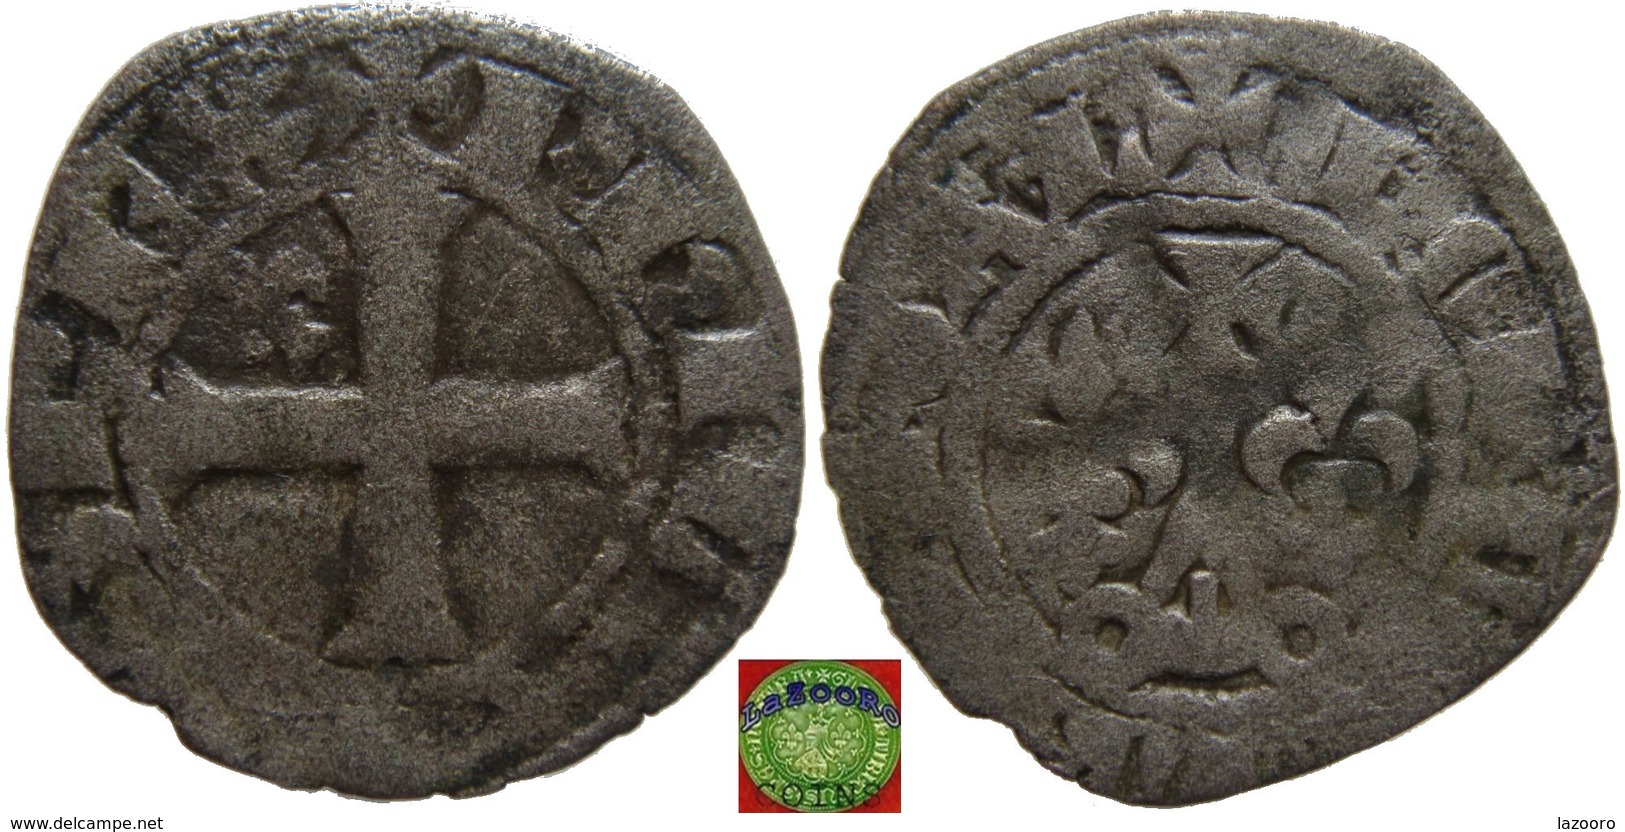 LaZooRo: France - AR Double Tournois Of Philip IV (1285-1314), MON DVPLEX REGAL - Silver - 1285-1314 Felipe IV El Hermoso